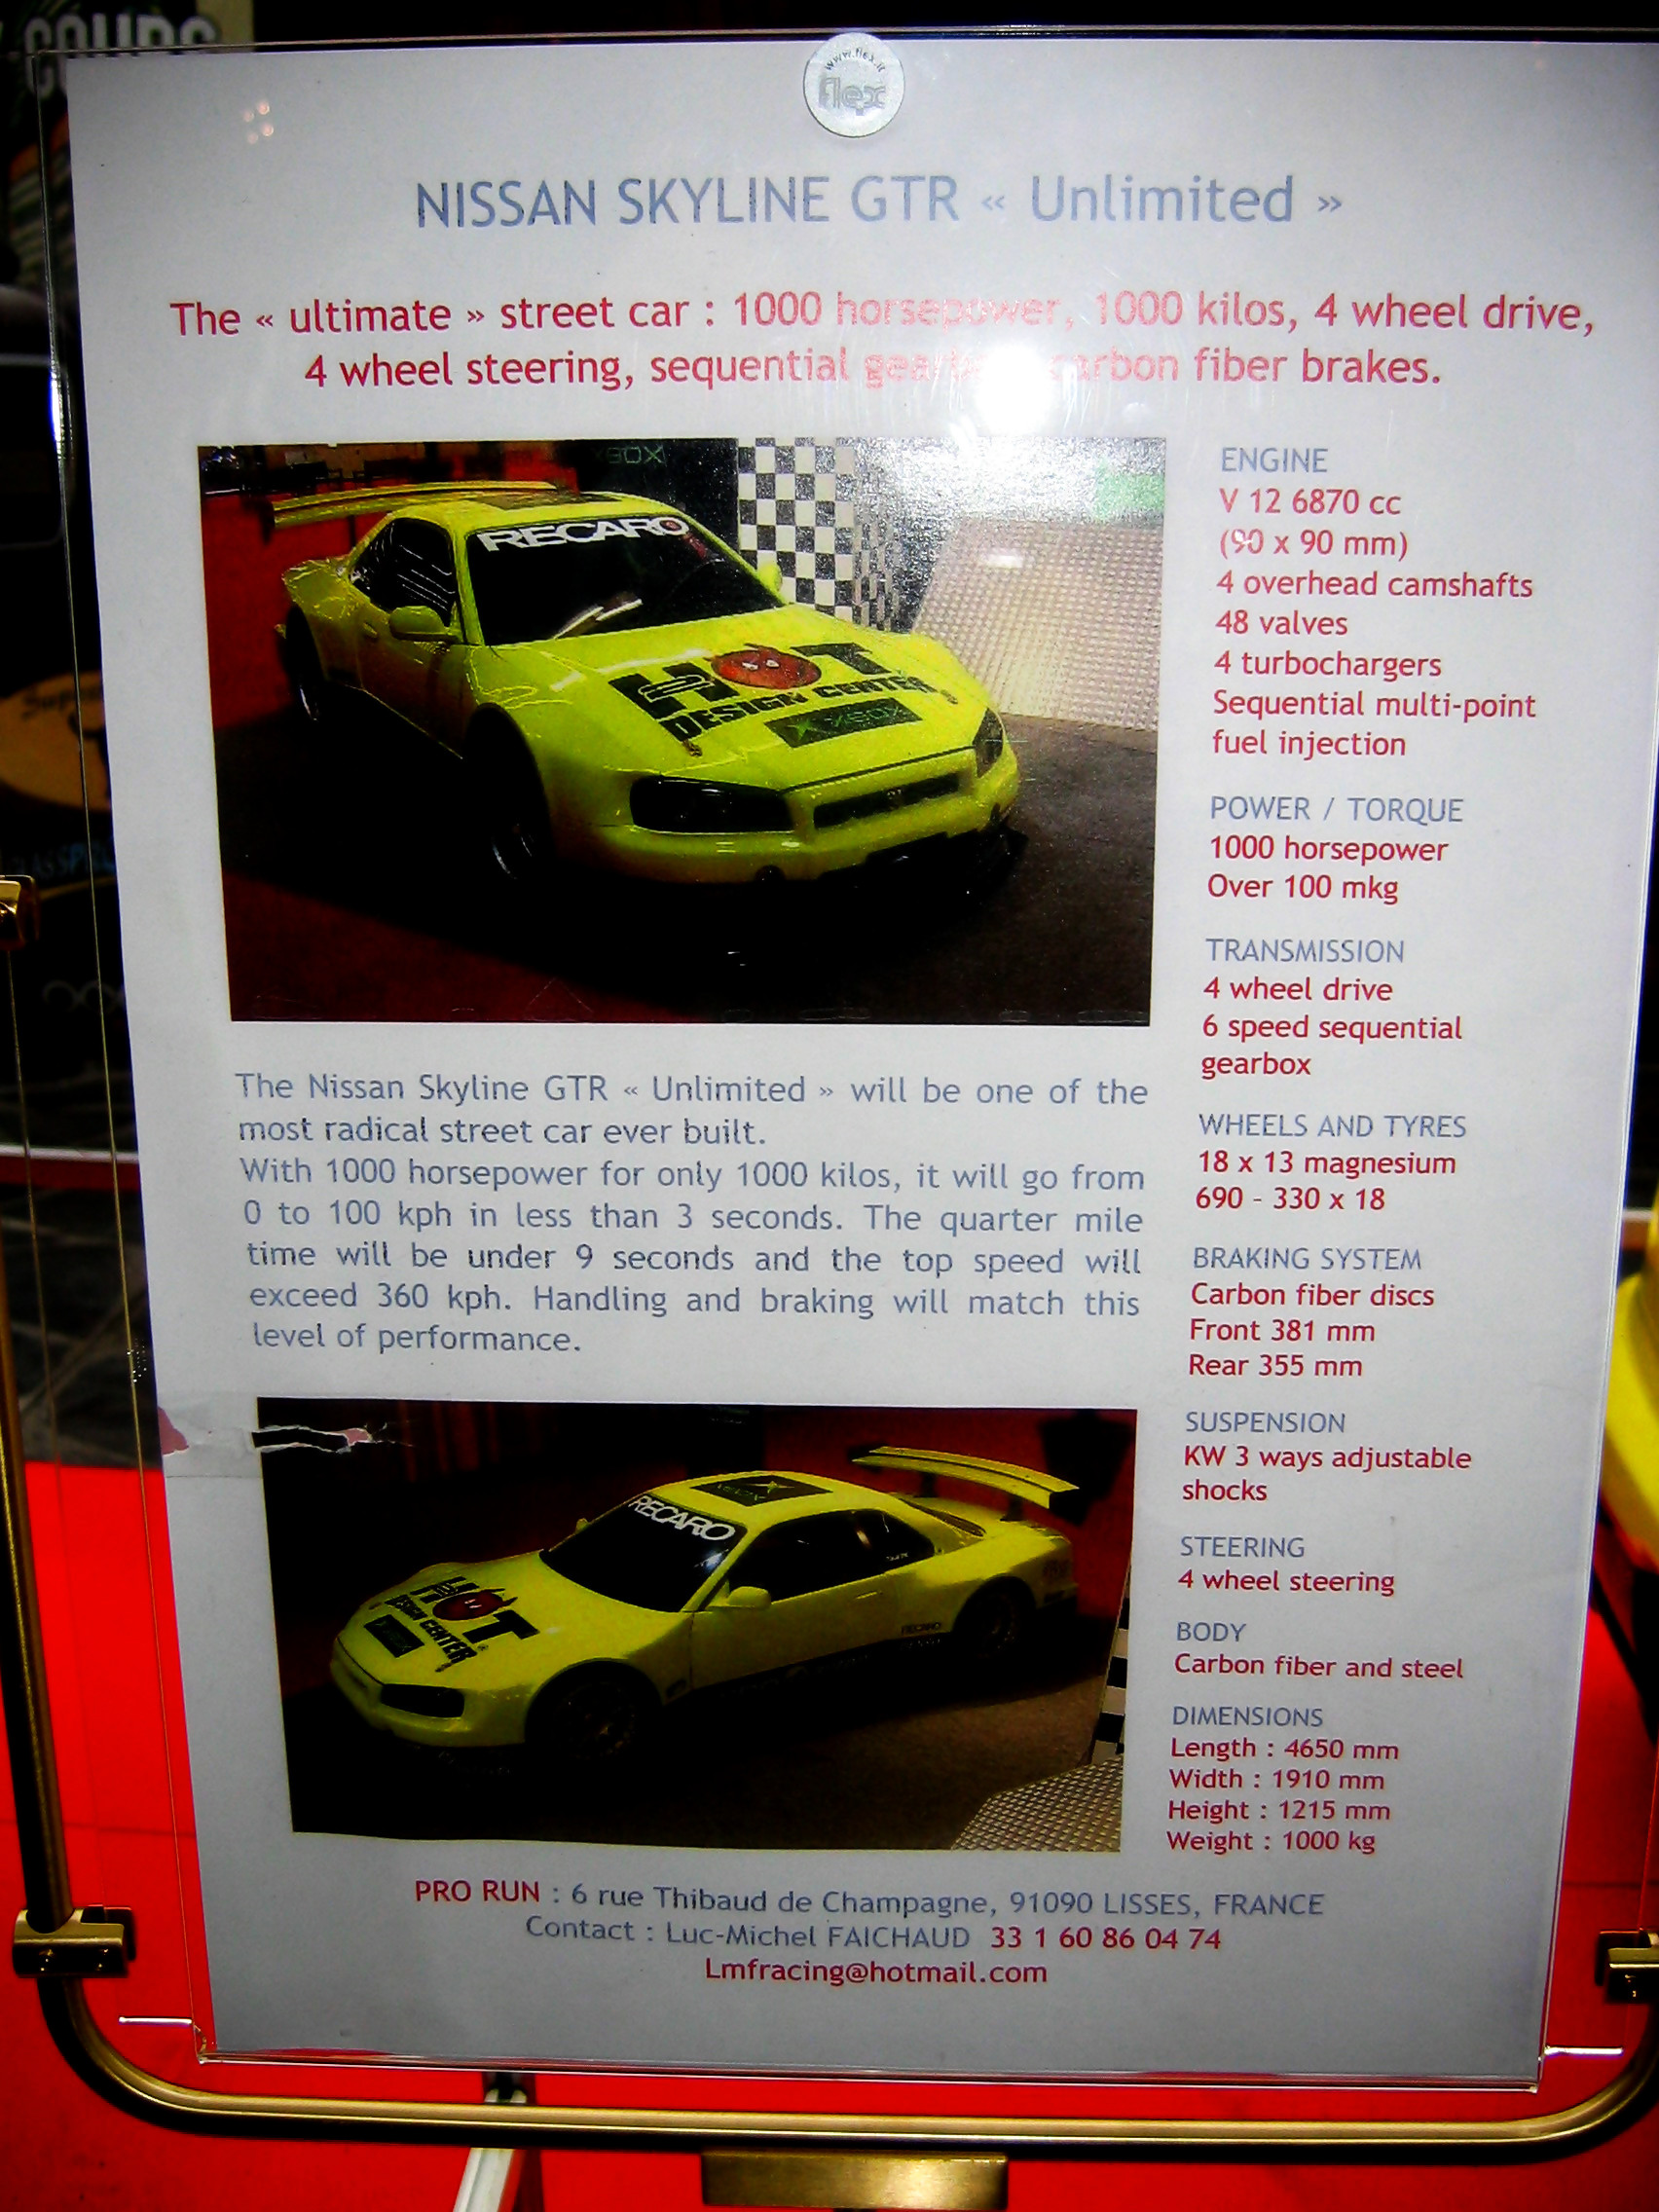 Eurocar Show 2005, Nissan Skyline GTR - Unlimited, lmfracing